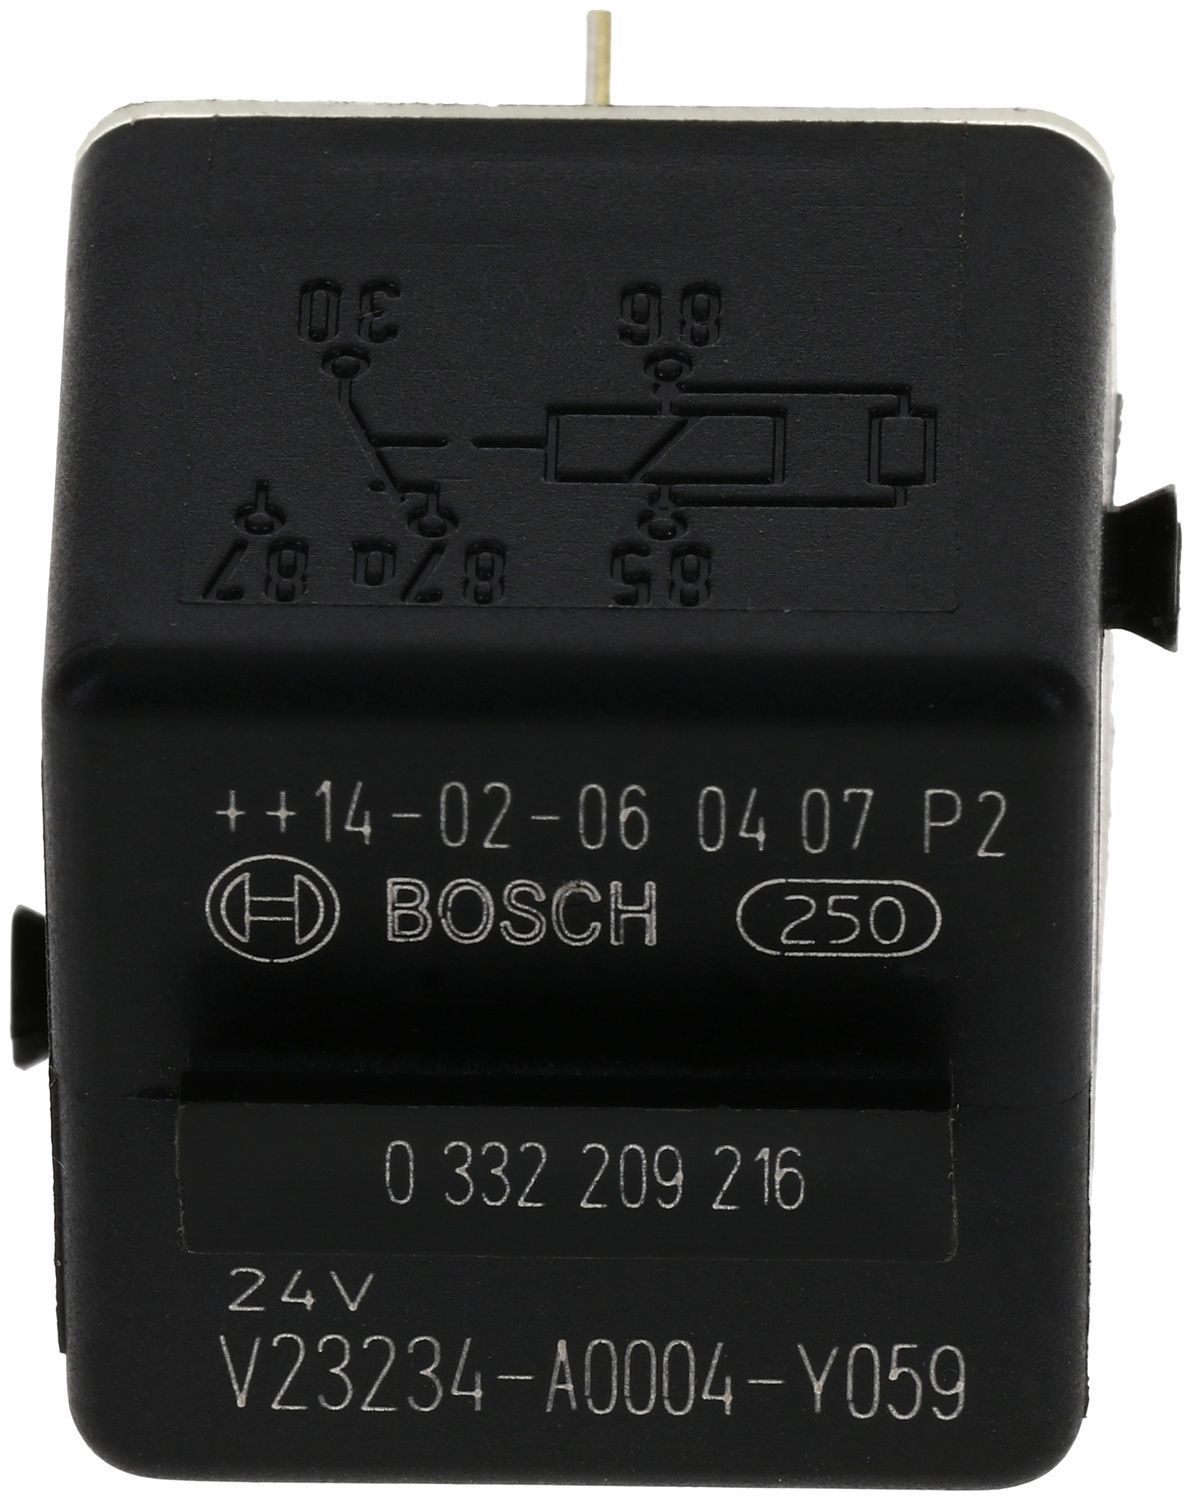 BOSCH - HVAC Motor Relay - BOS 0332209216